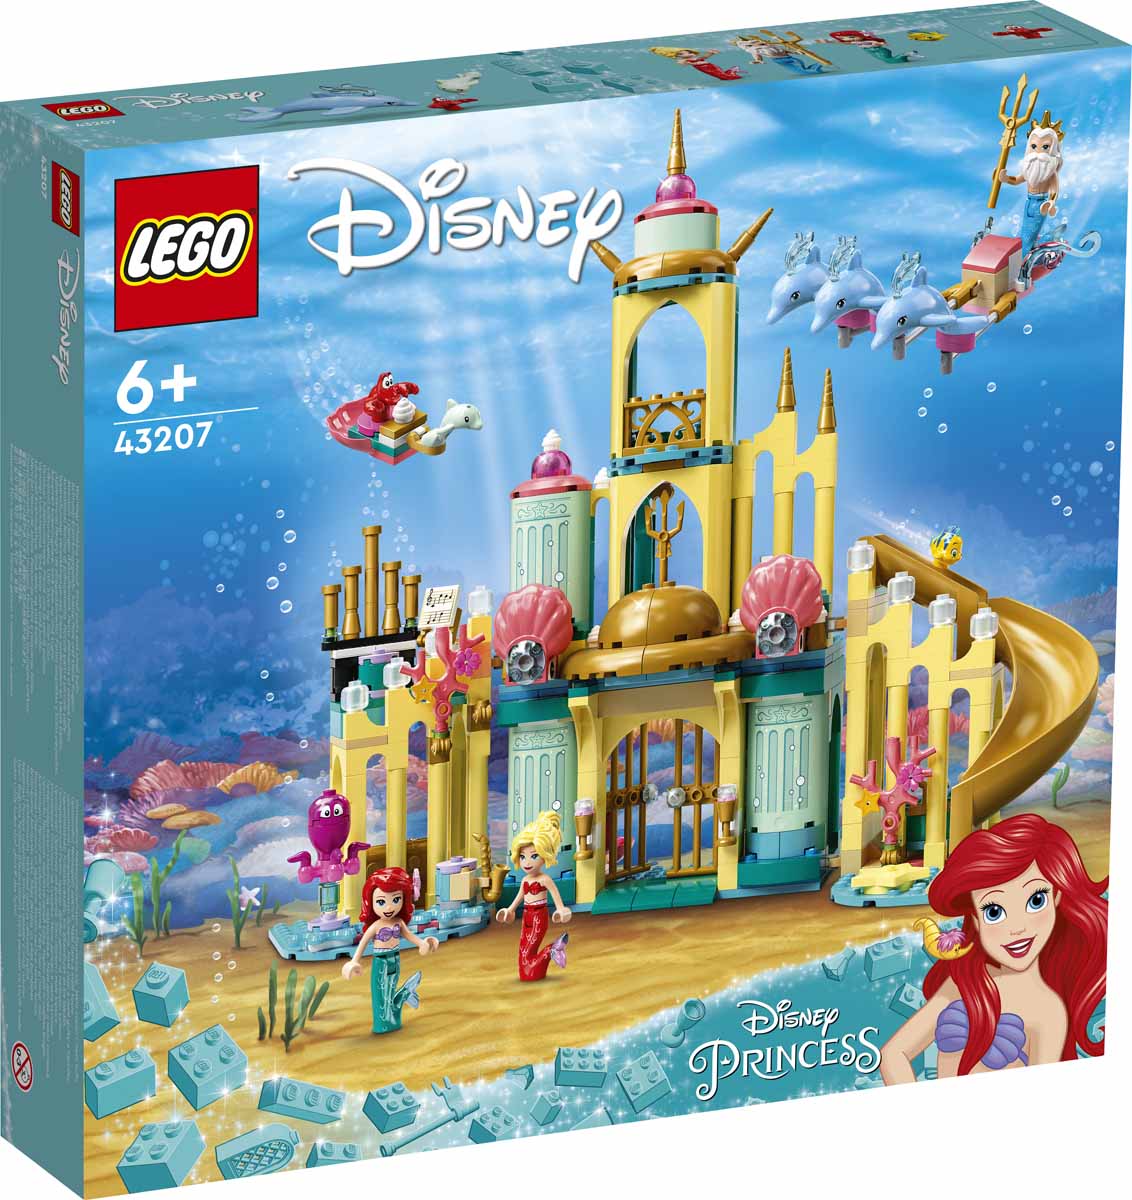 LEGO Disney Princess Ariel víz alatti palotája 43207